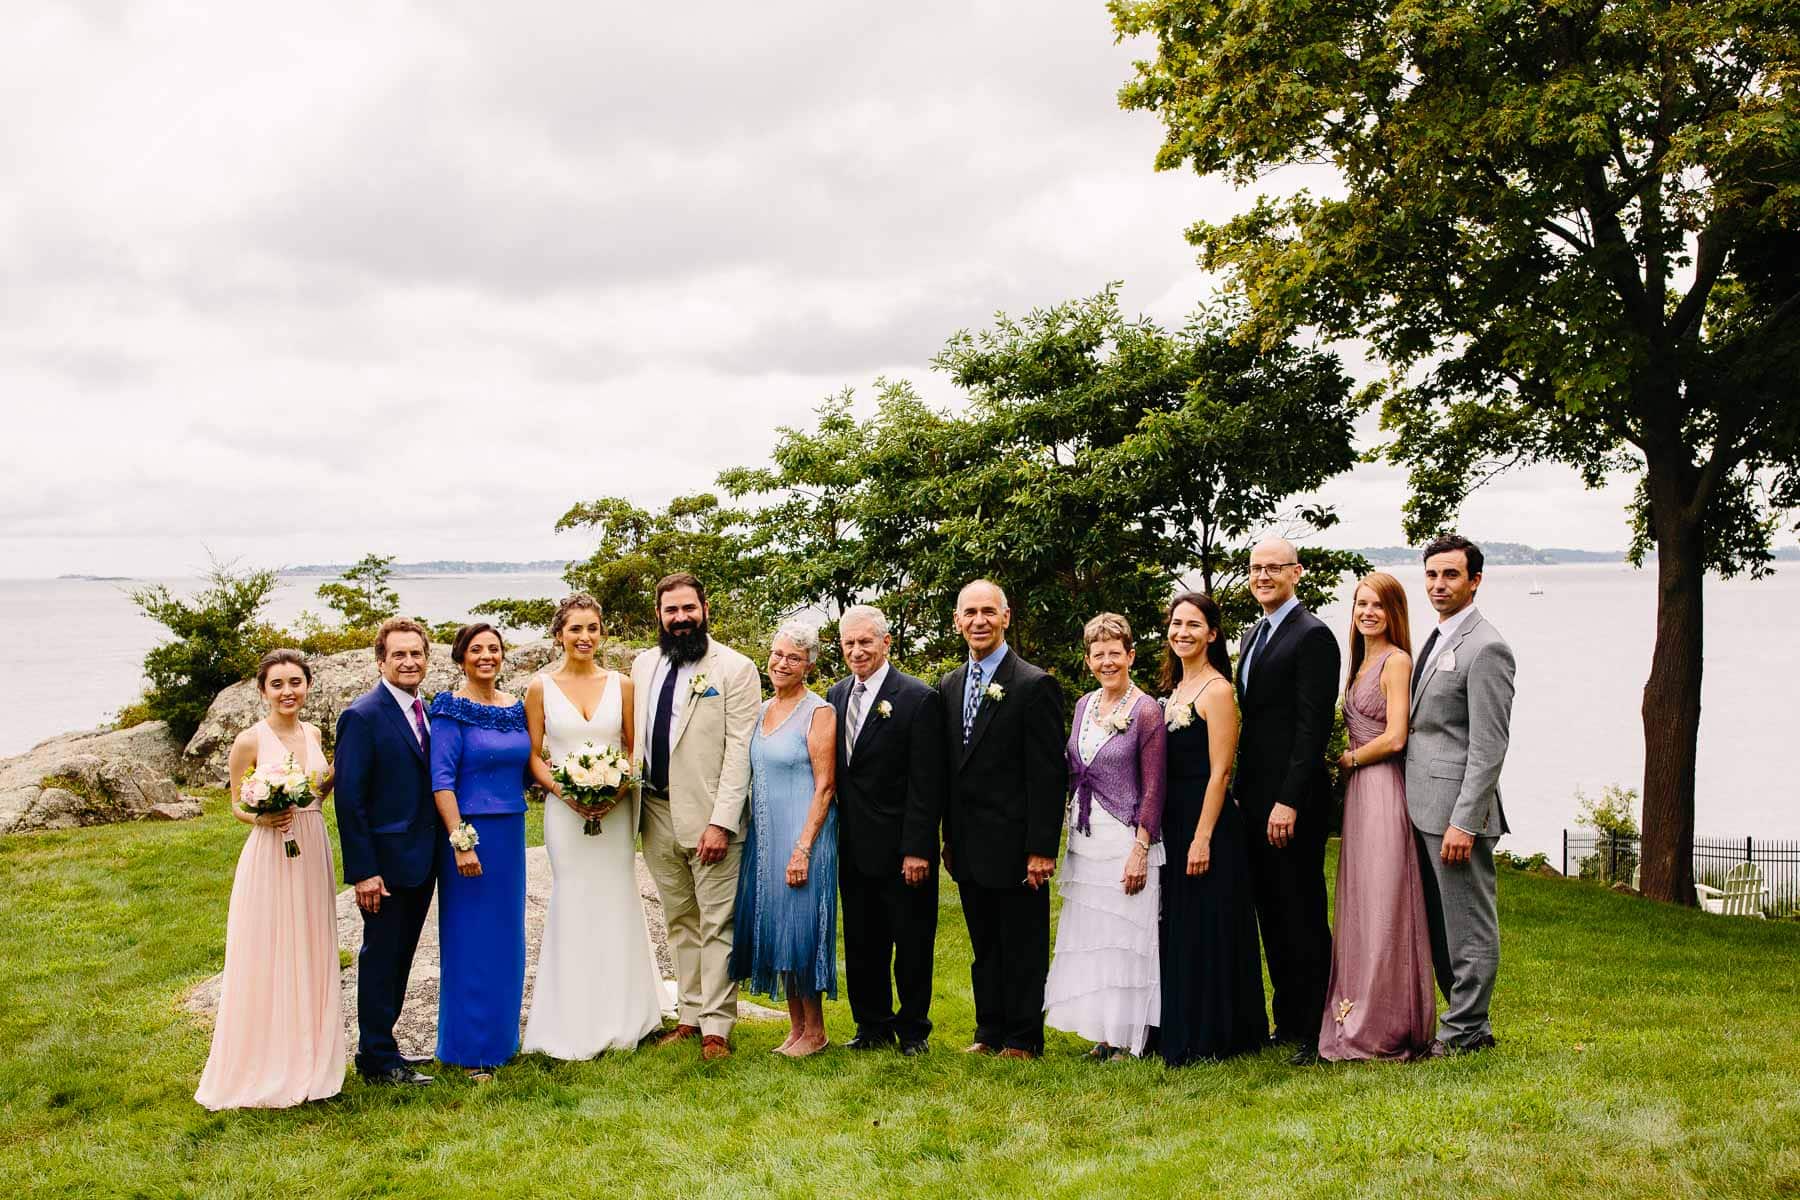 Misselwood wedding family portrait | Kelly Benvenuto Photography | Boston wedding photographer